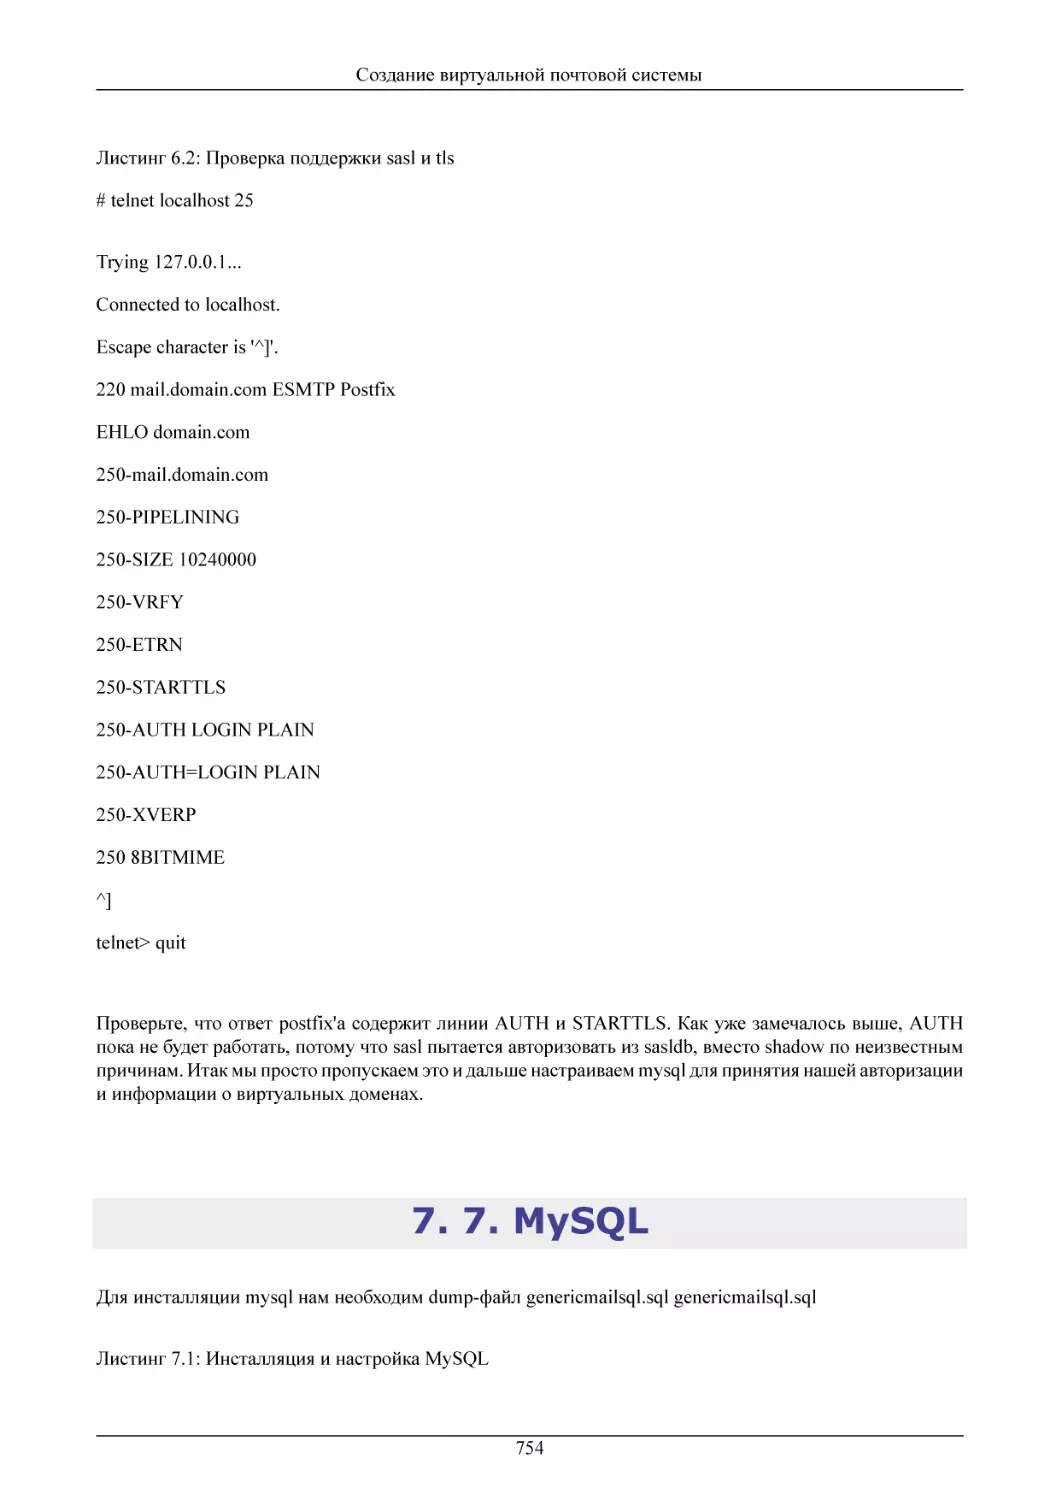 7. MySQL